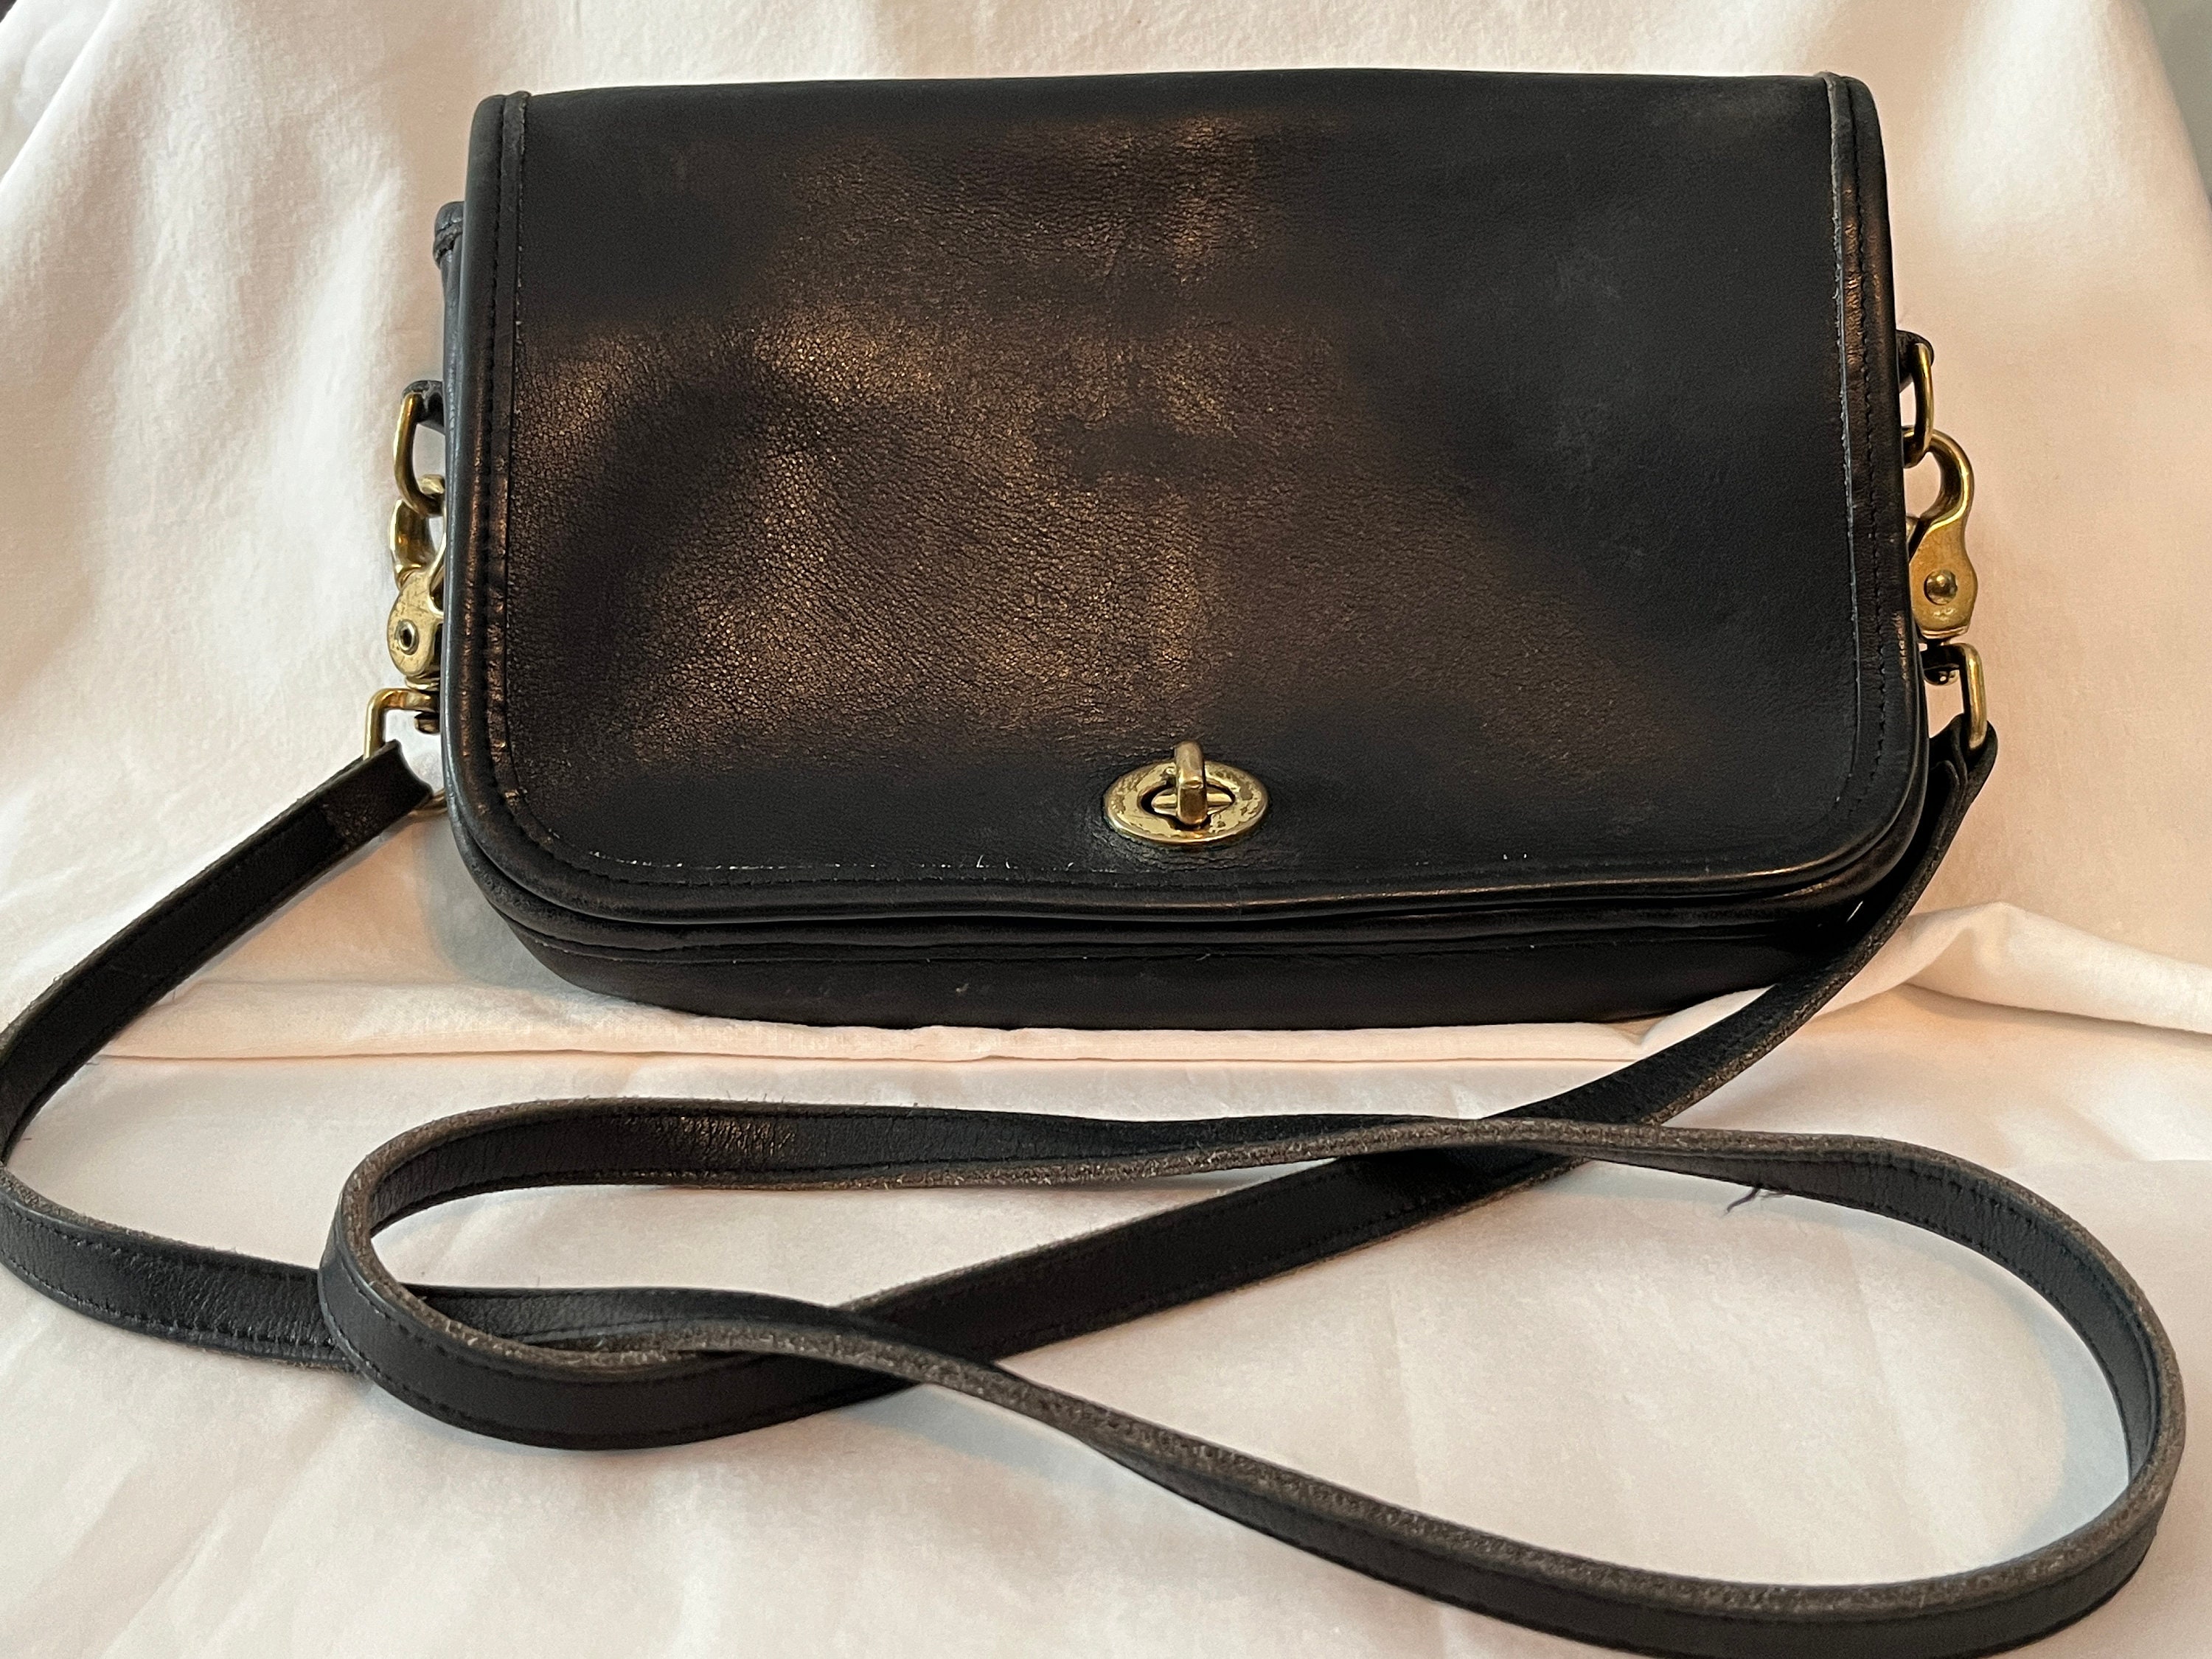 Black Coach purse | Coach purses, Black coach purses, Purses